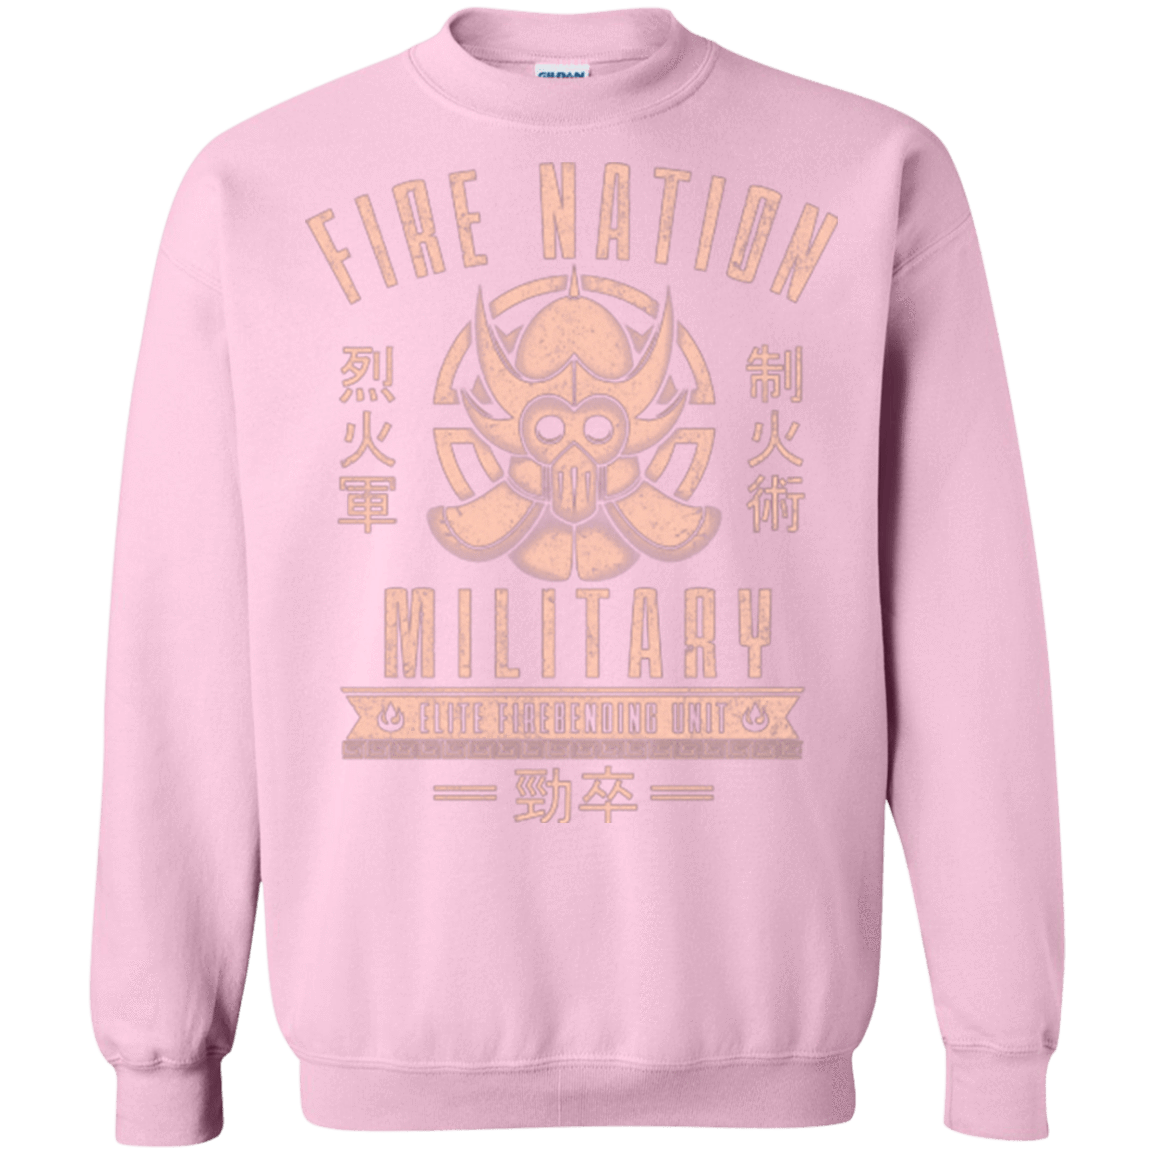 Sweatshirts Light Pink / Small Fire is Fierce Crewneck Sweatshirt